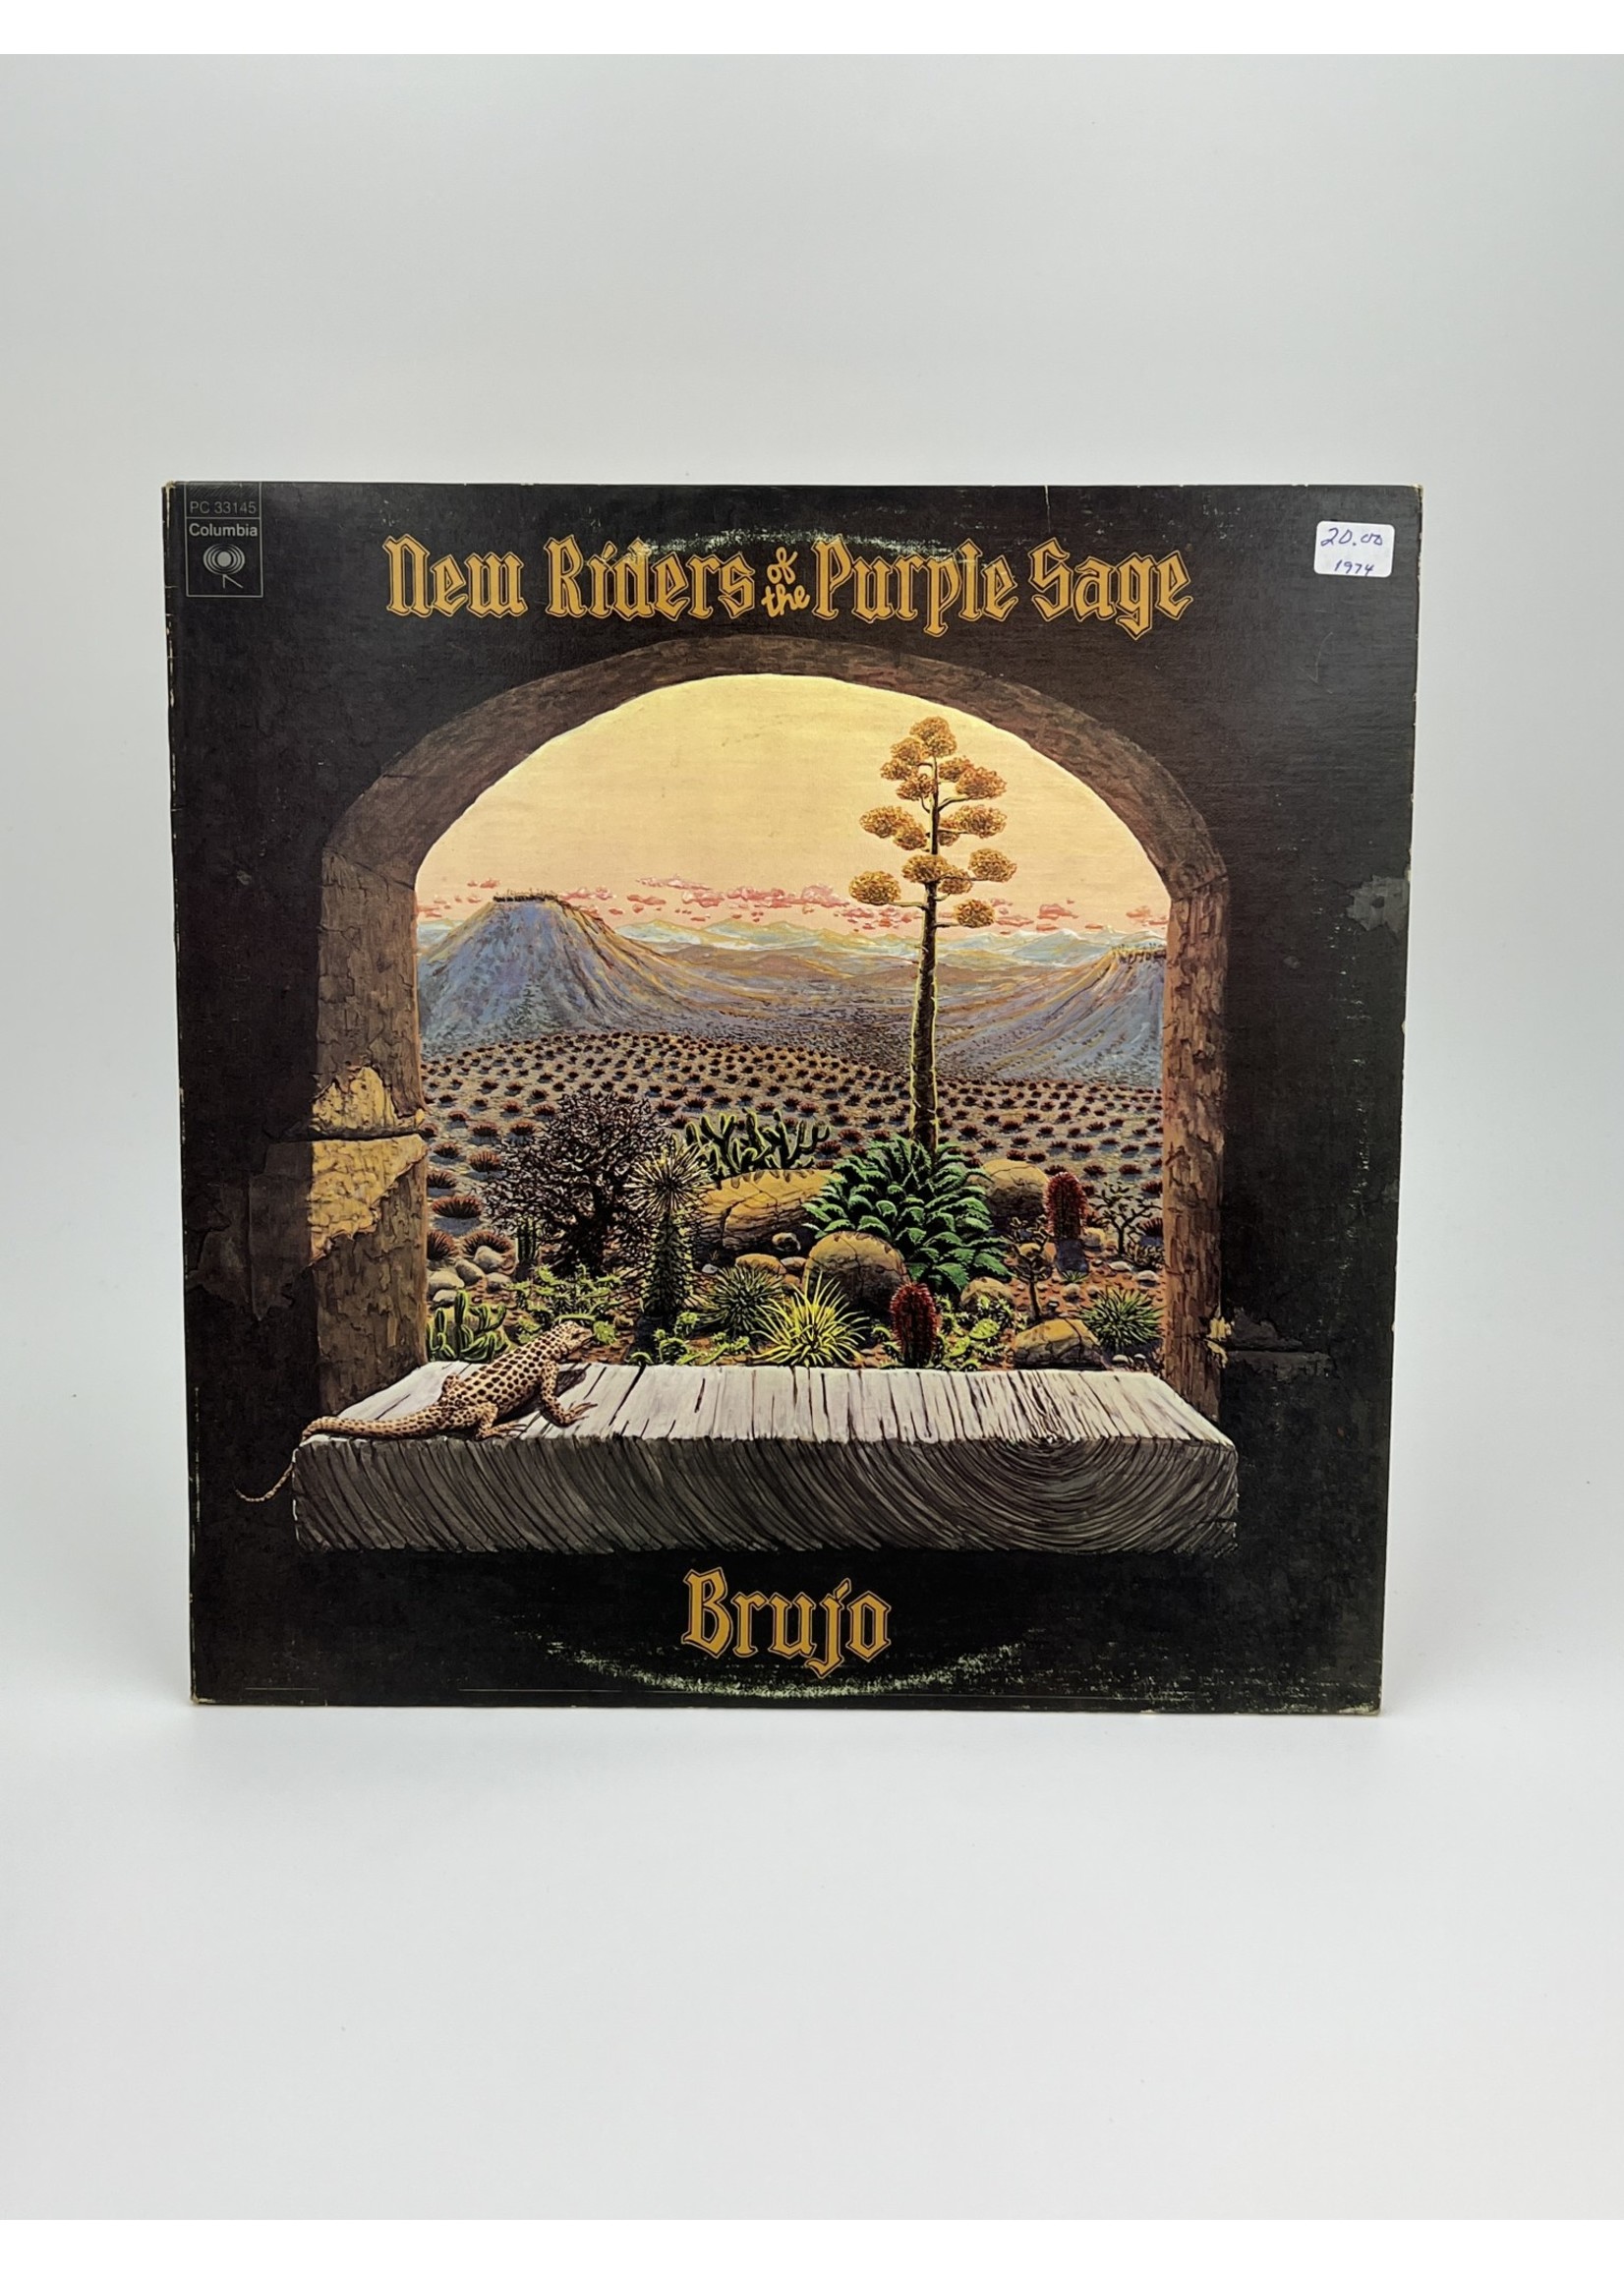 LP New Riders Of The Purple Sage Brujo LP Record